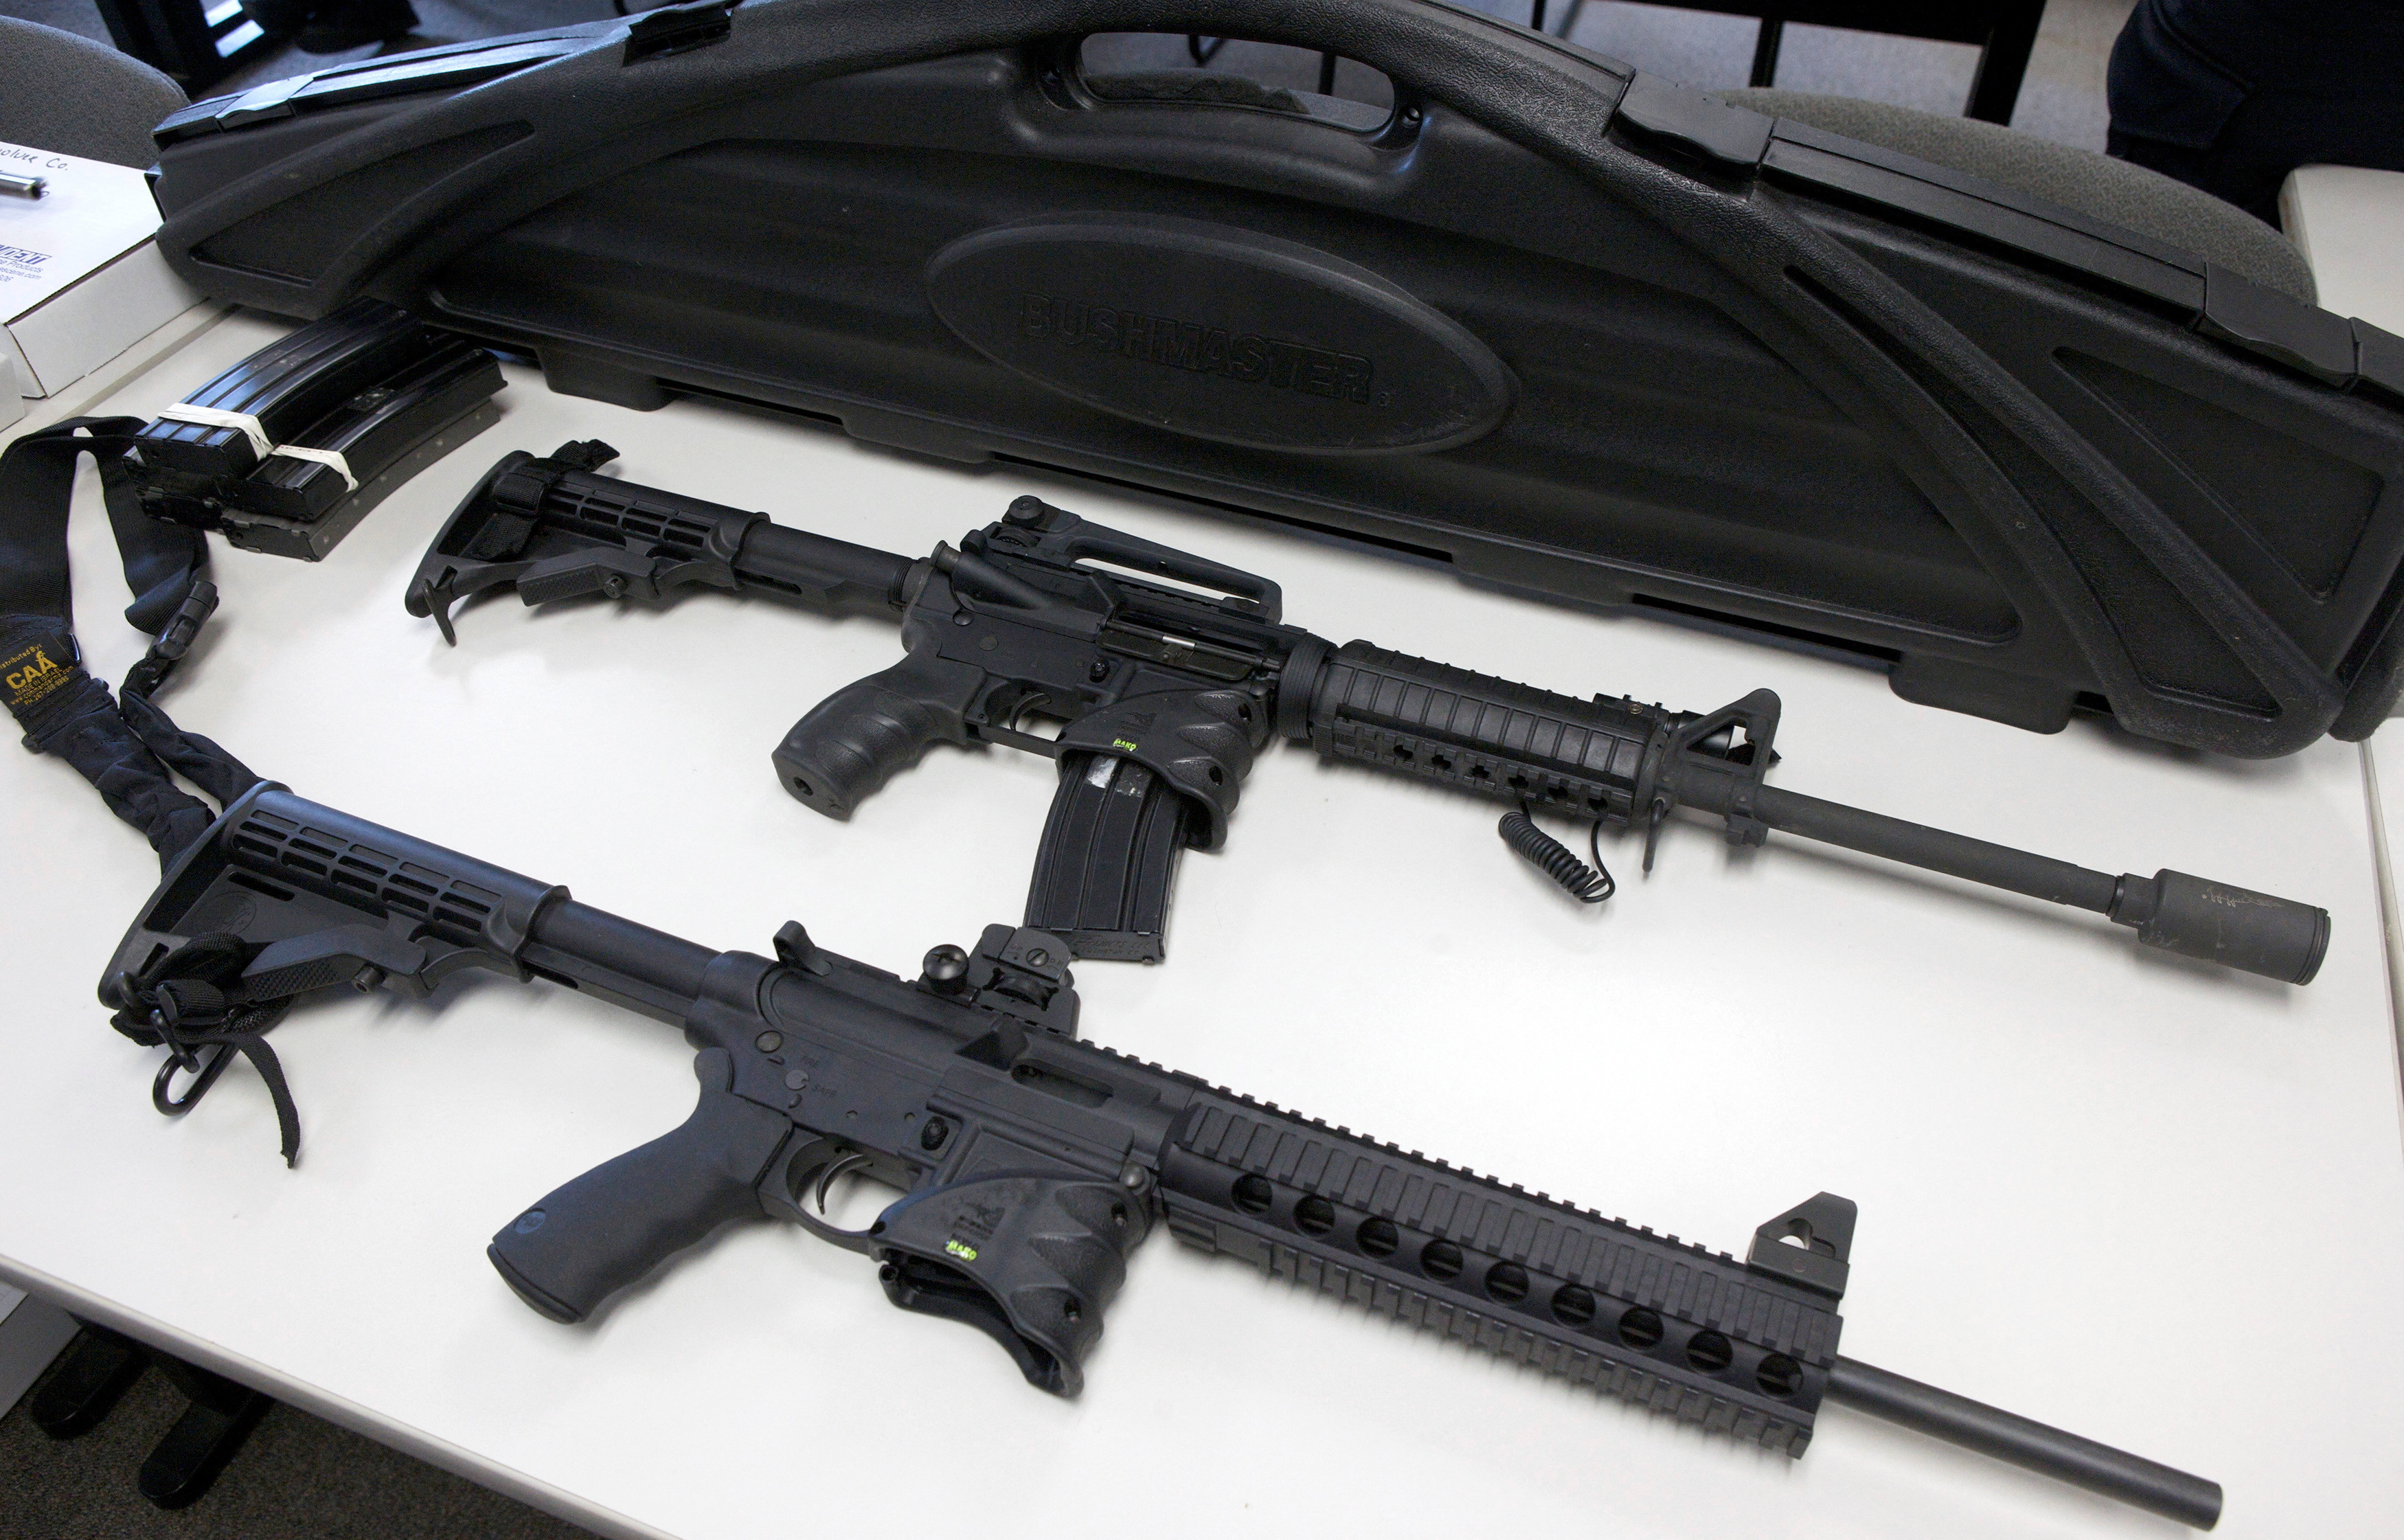 U.S. Judge Dismisses Mexico’s B Lawsuit Against Gun Manufacturers